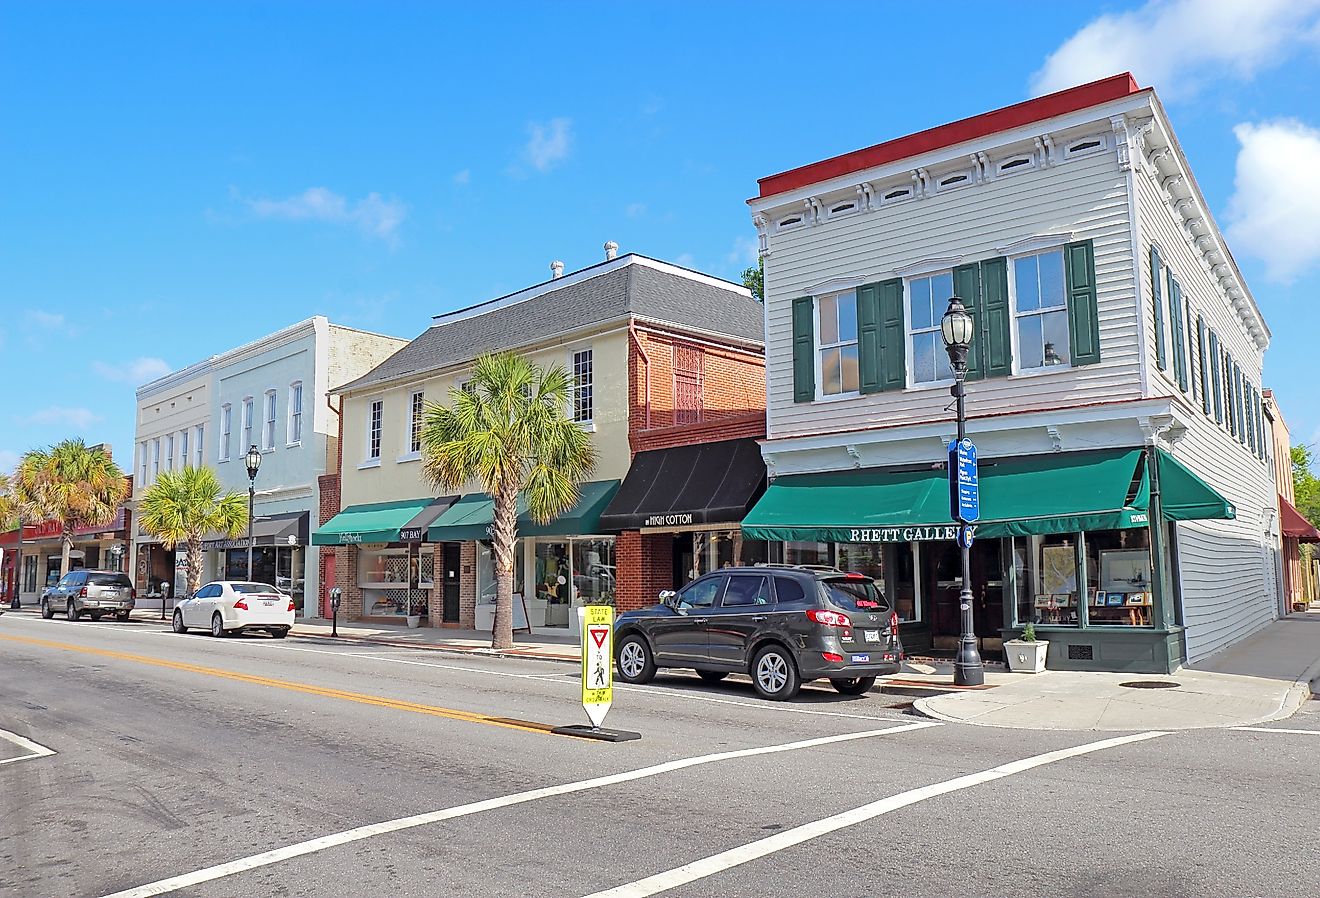 Downtown street in Beaufort, South Carolina. Image credit Stephen B. Goodwin via Shutterstock